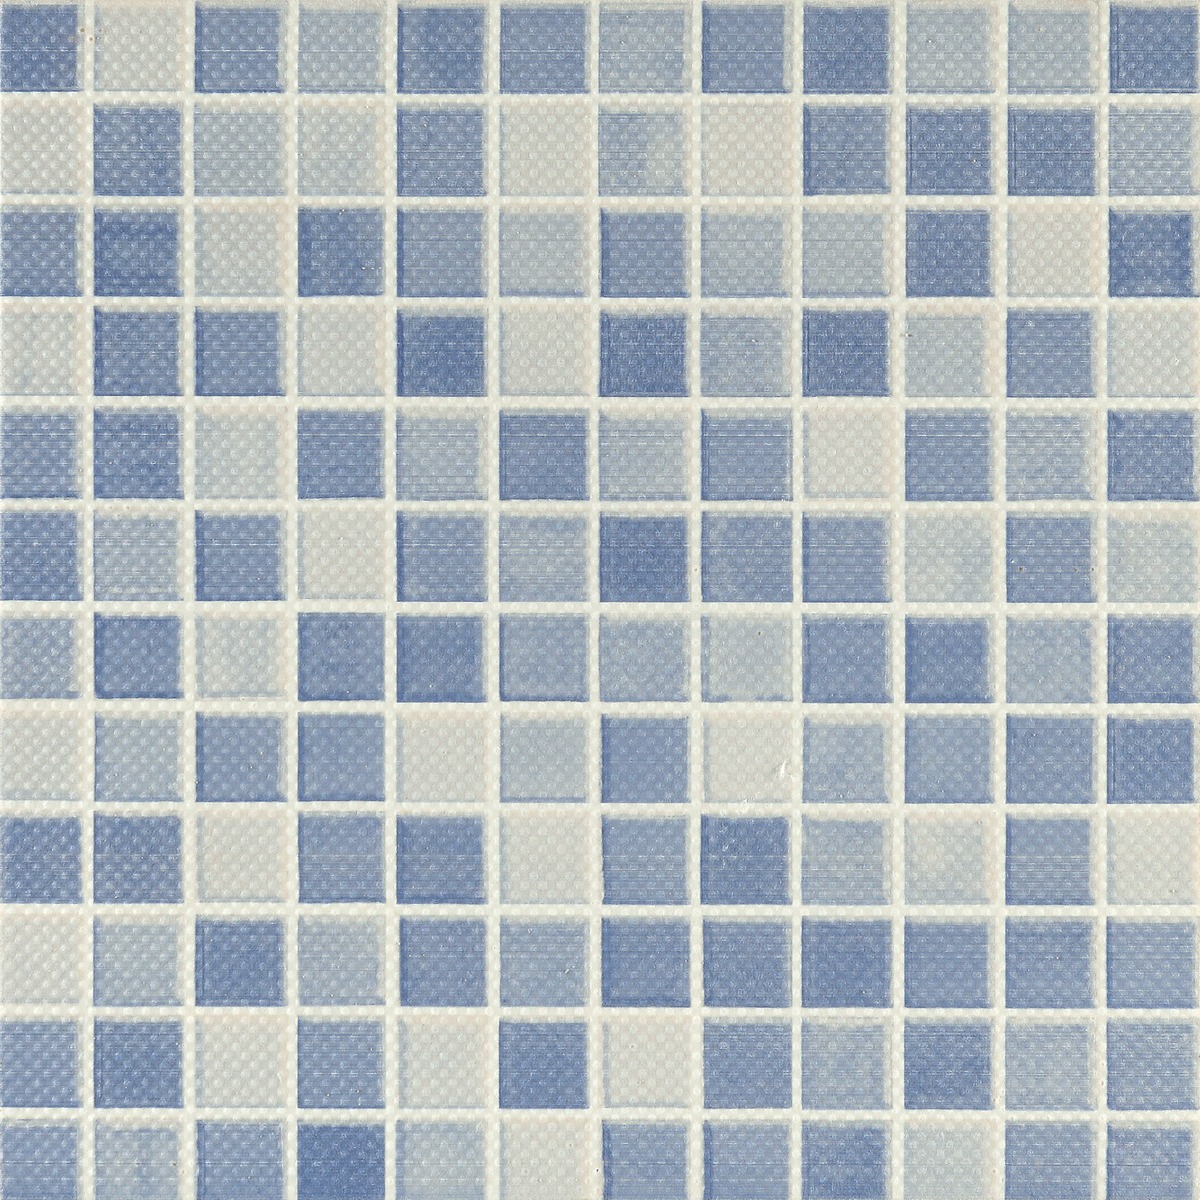 Blue Tiles for Accent Tiles